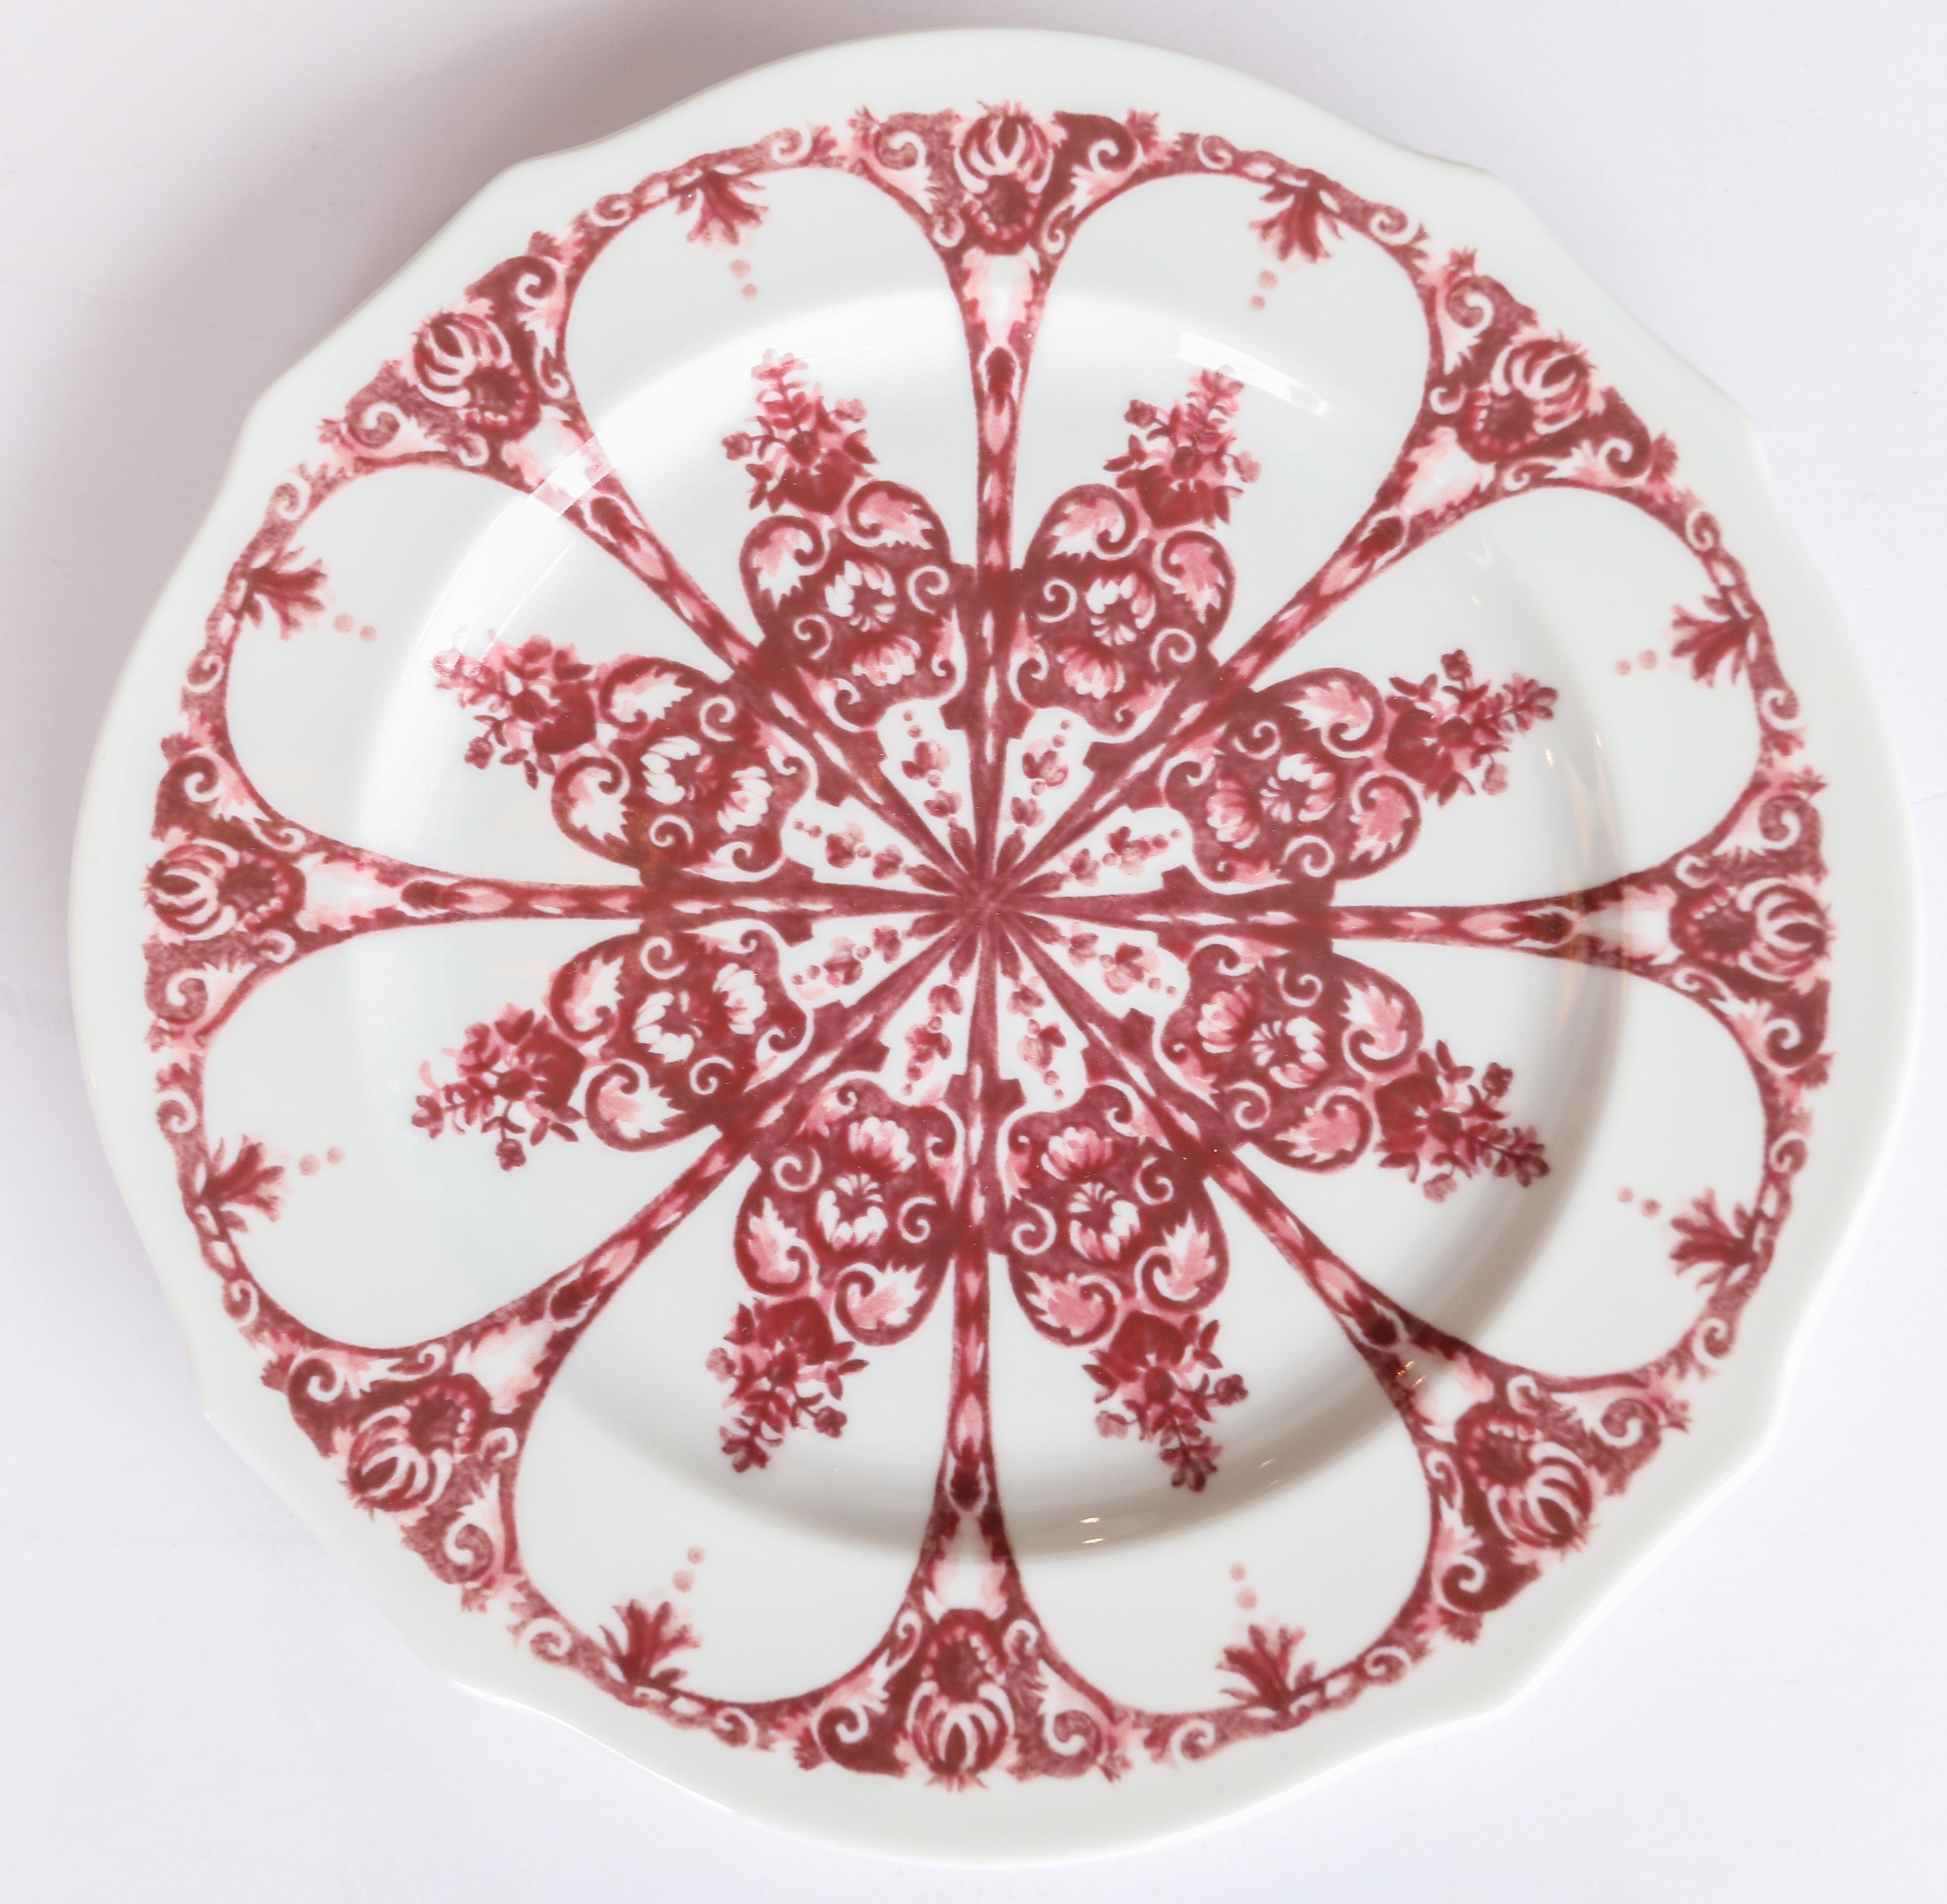 Richard Ginori Babele Rosso red flat dessert plate in the Duchessa shape 22cm in diameter.
   